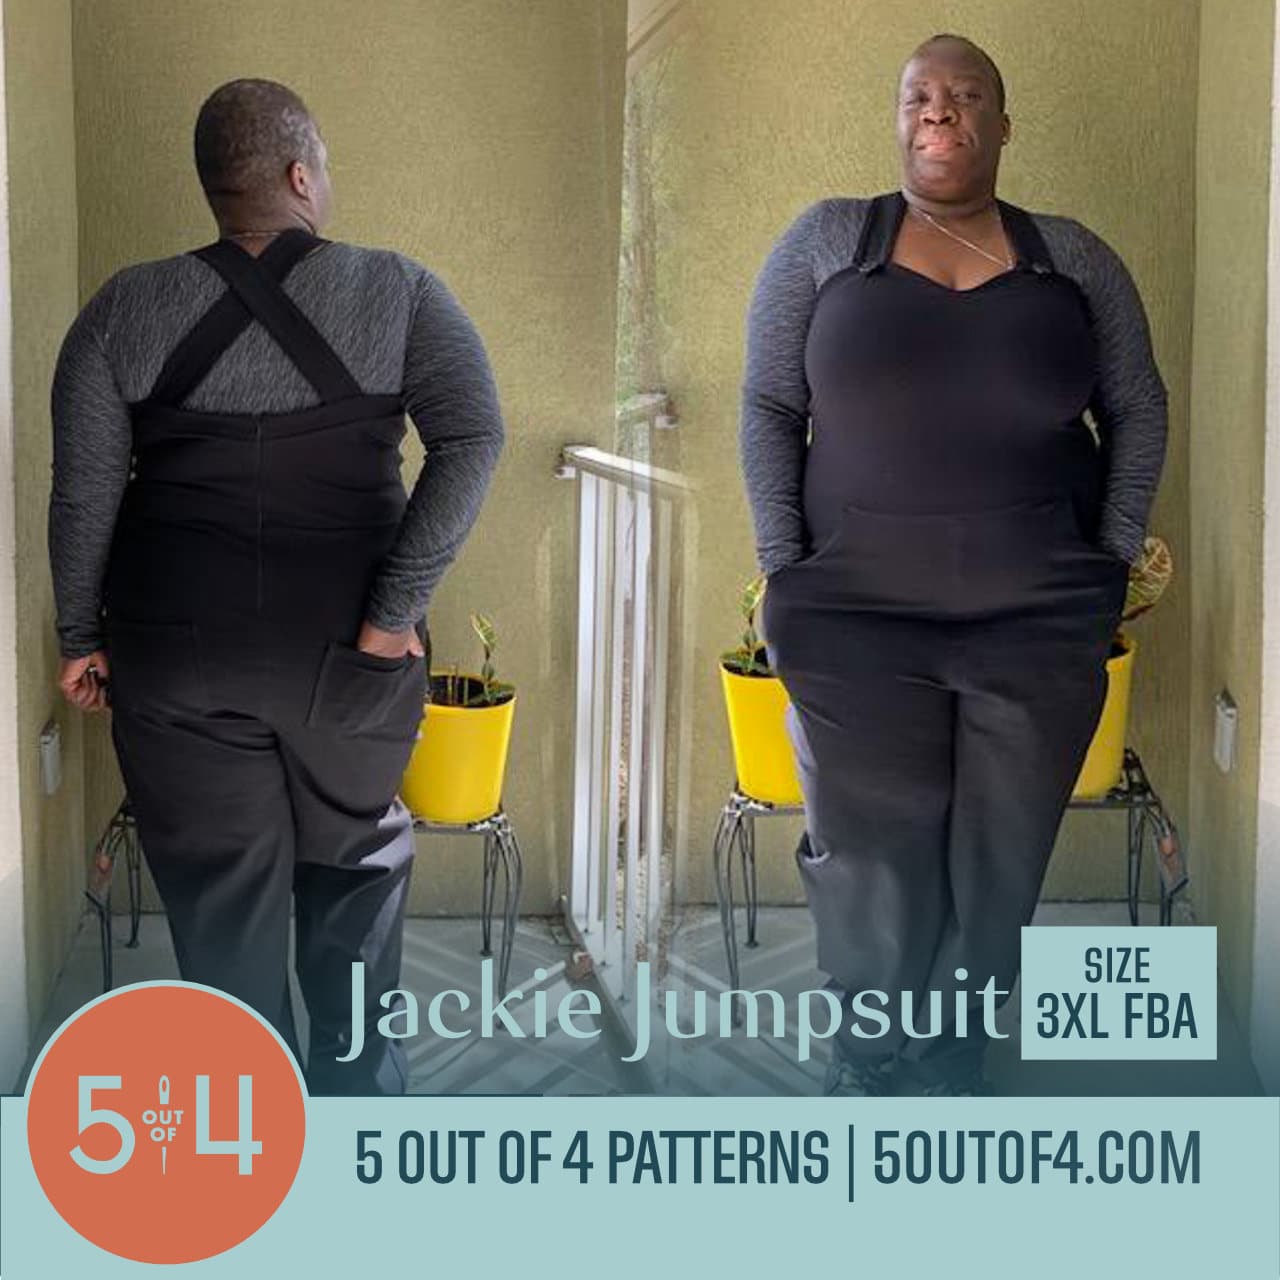 https://5outof4.com/wp-content/uploads/2021/03/Jackie-Jumpsuit-size-3xl-fba.jpg